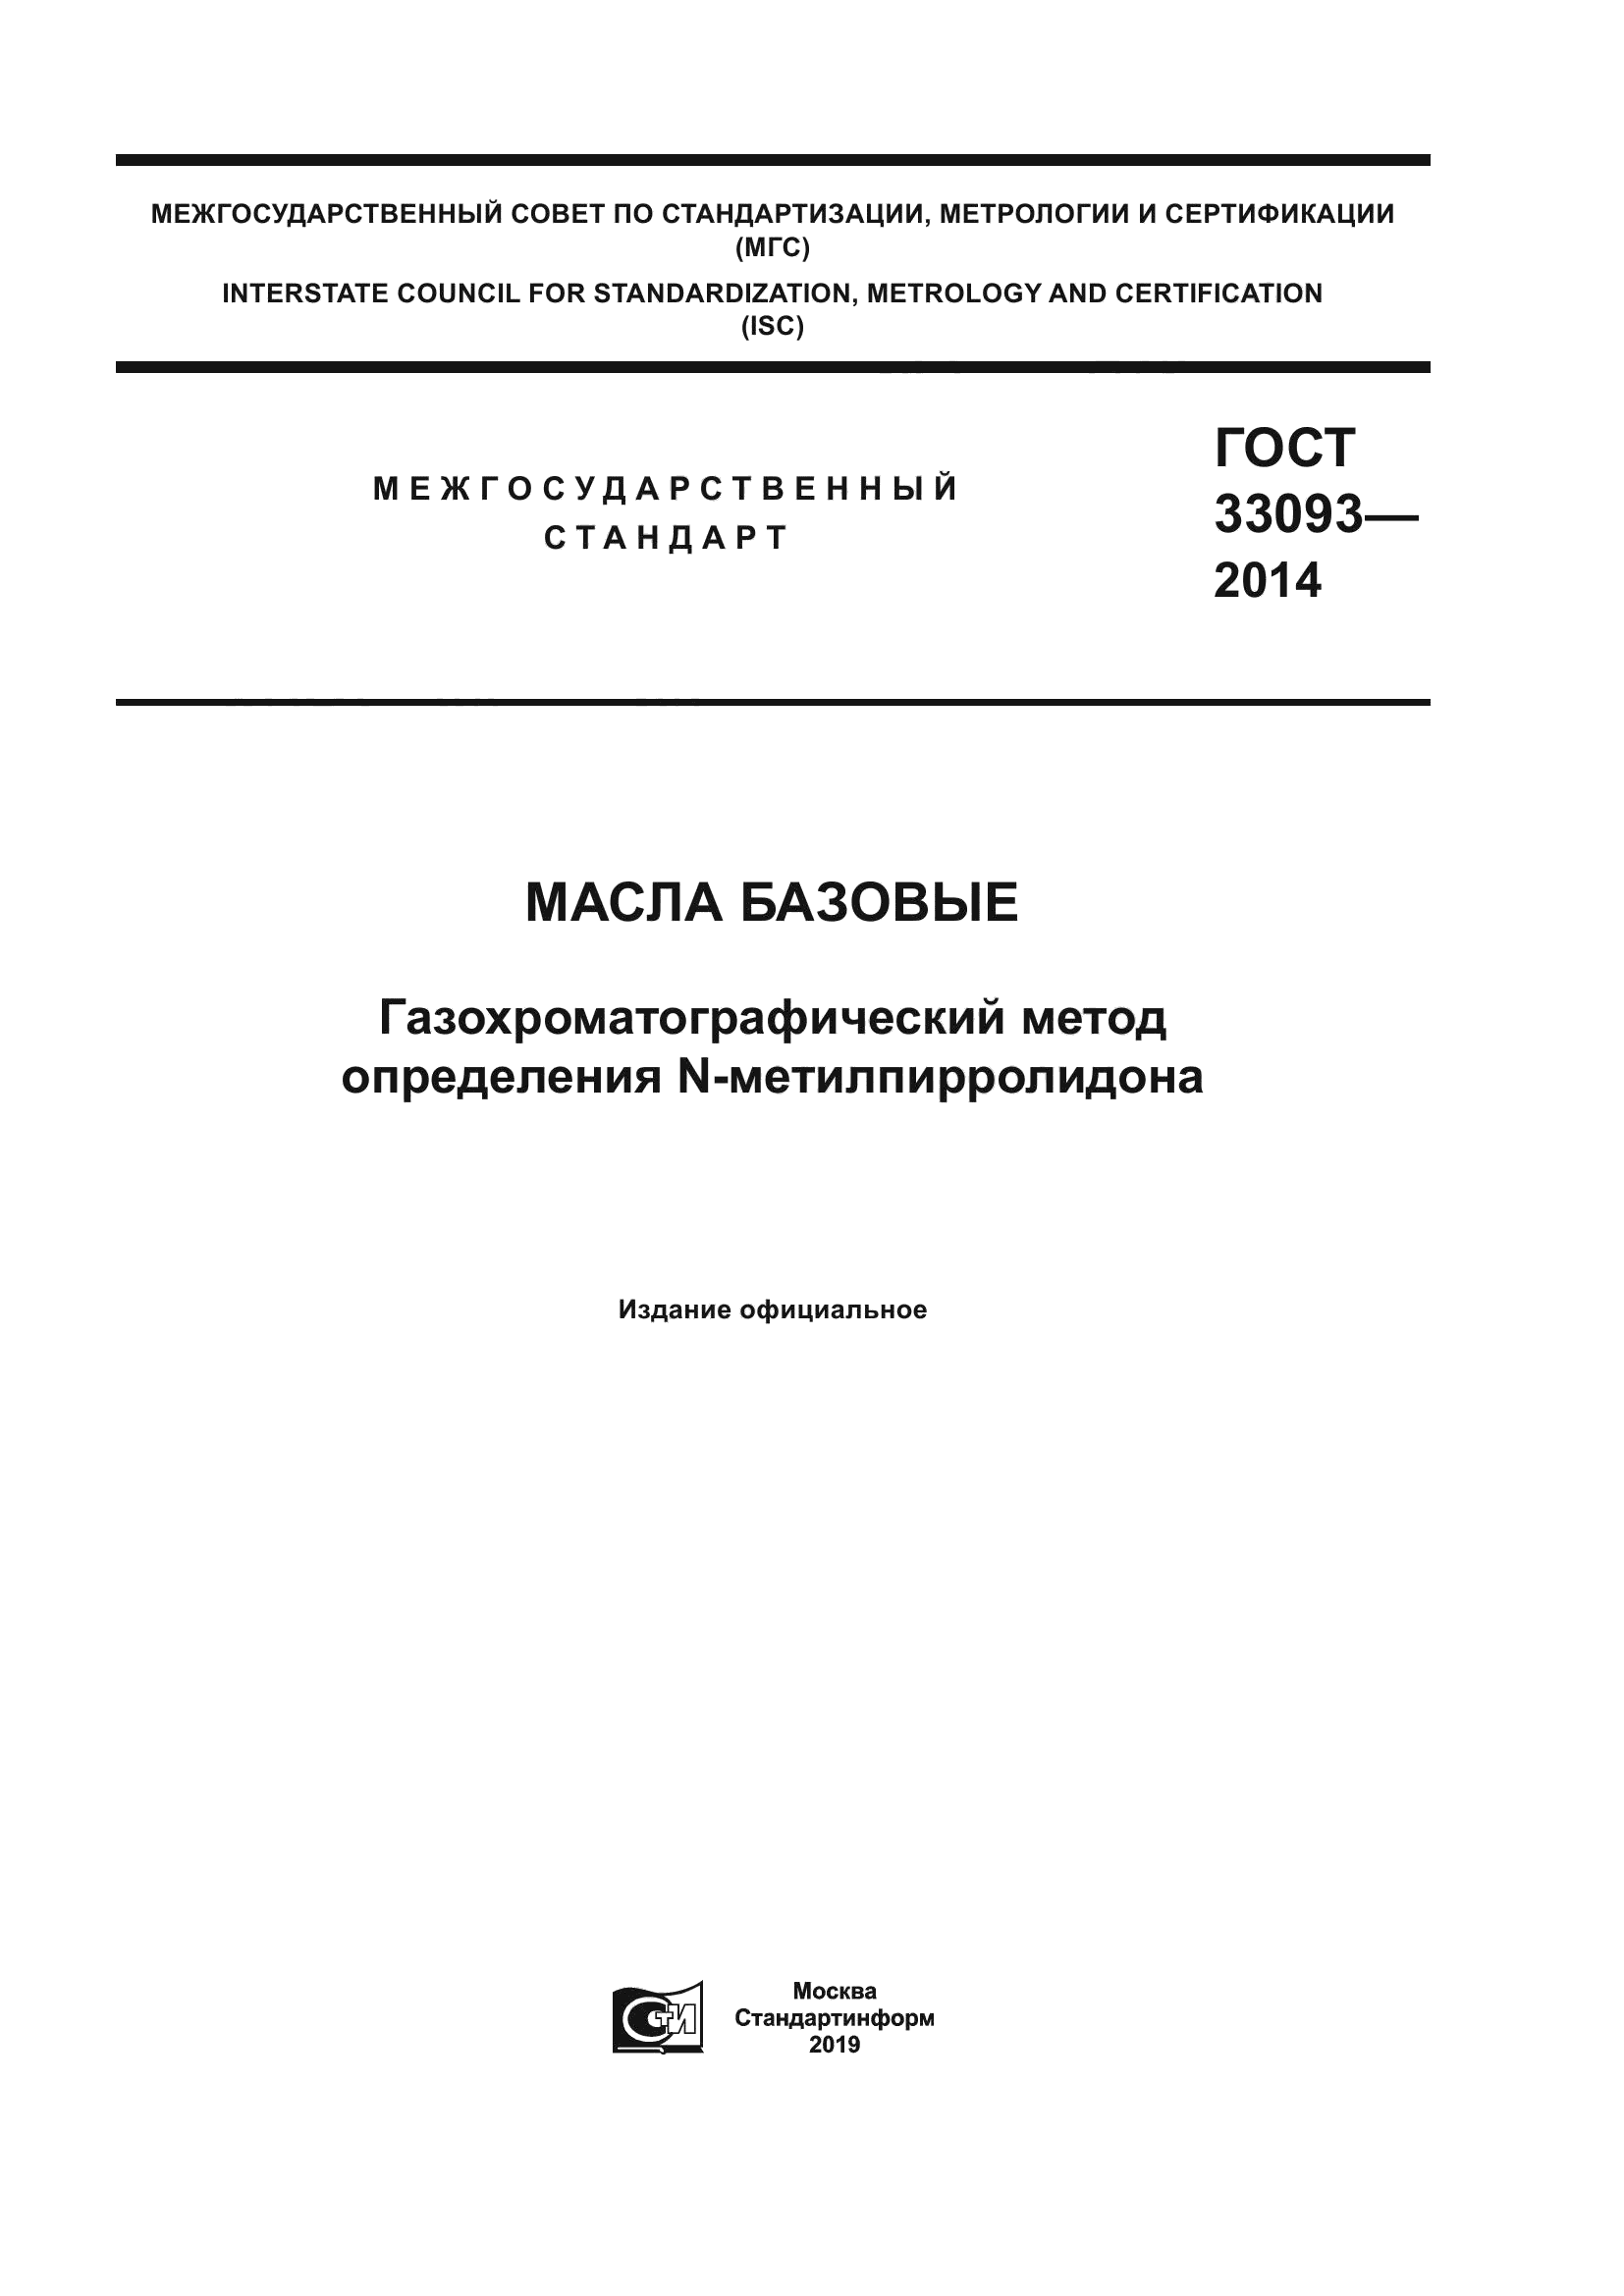 ГОСТ 33093-2014